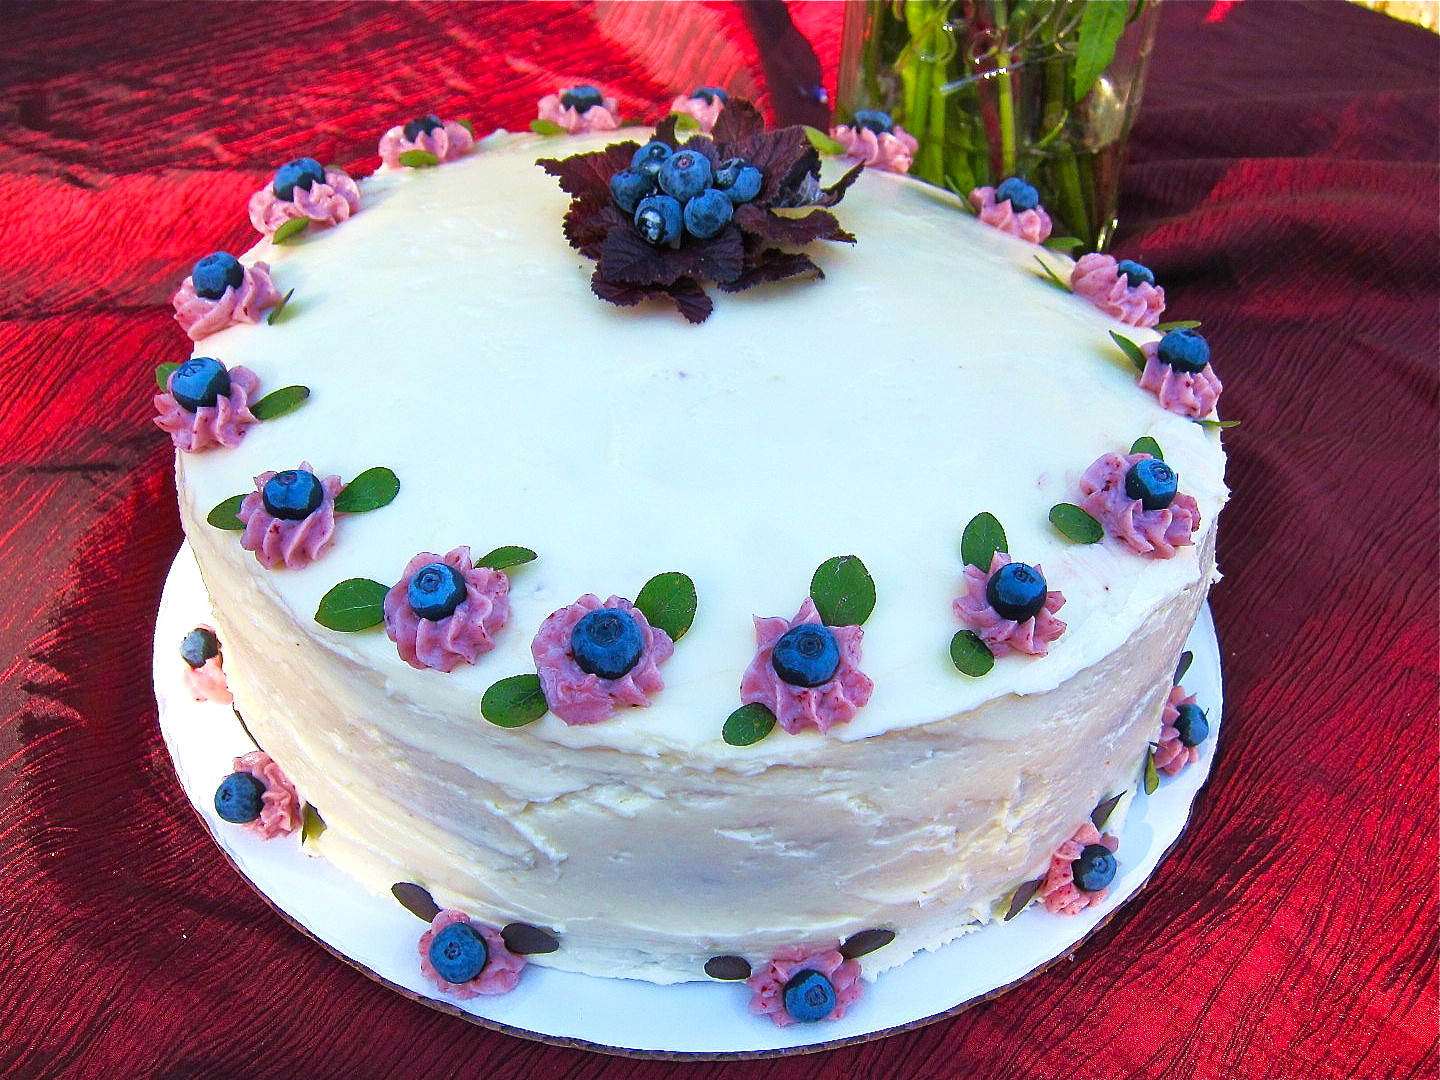 Blueberry Birthday Cake
 Arctic Garden Studio Lemon Butter Cake with Blueberry